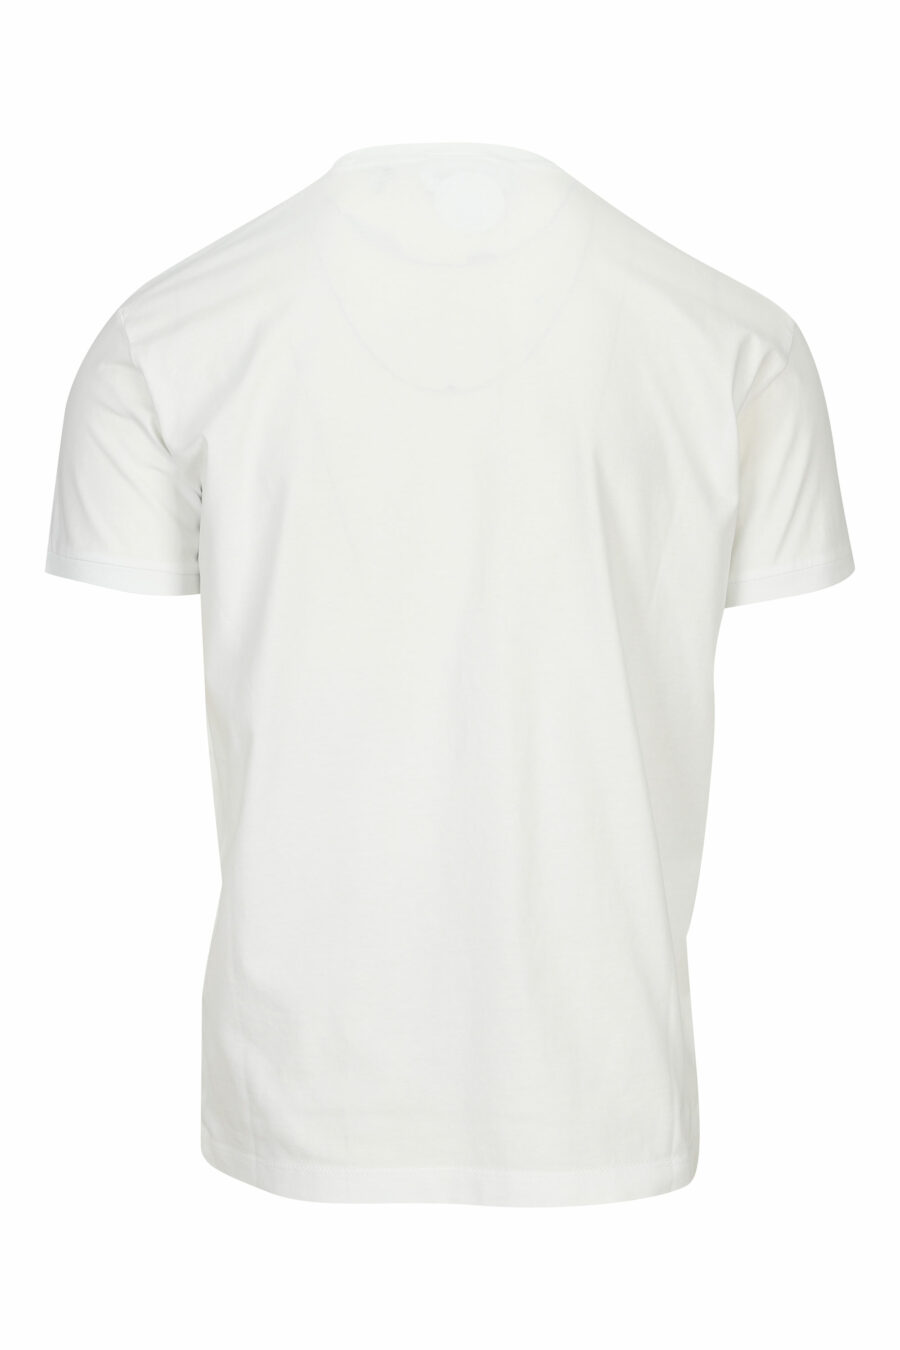 Camiseta blanca con maxilogo graffiti negro - 8054148572037 1